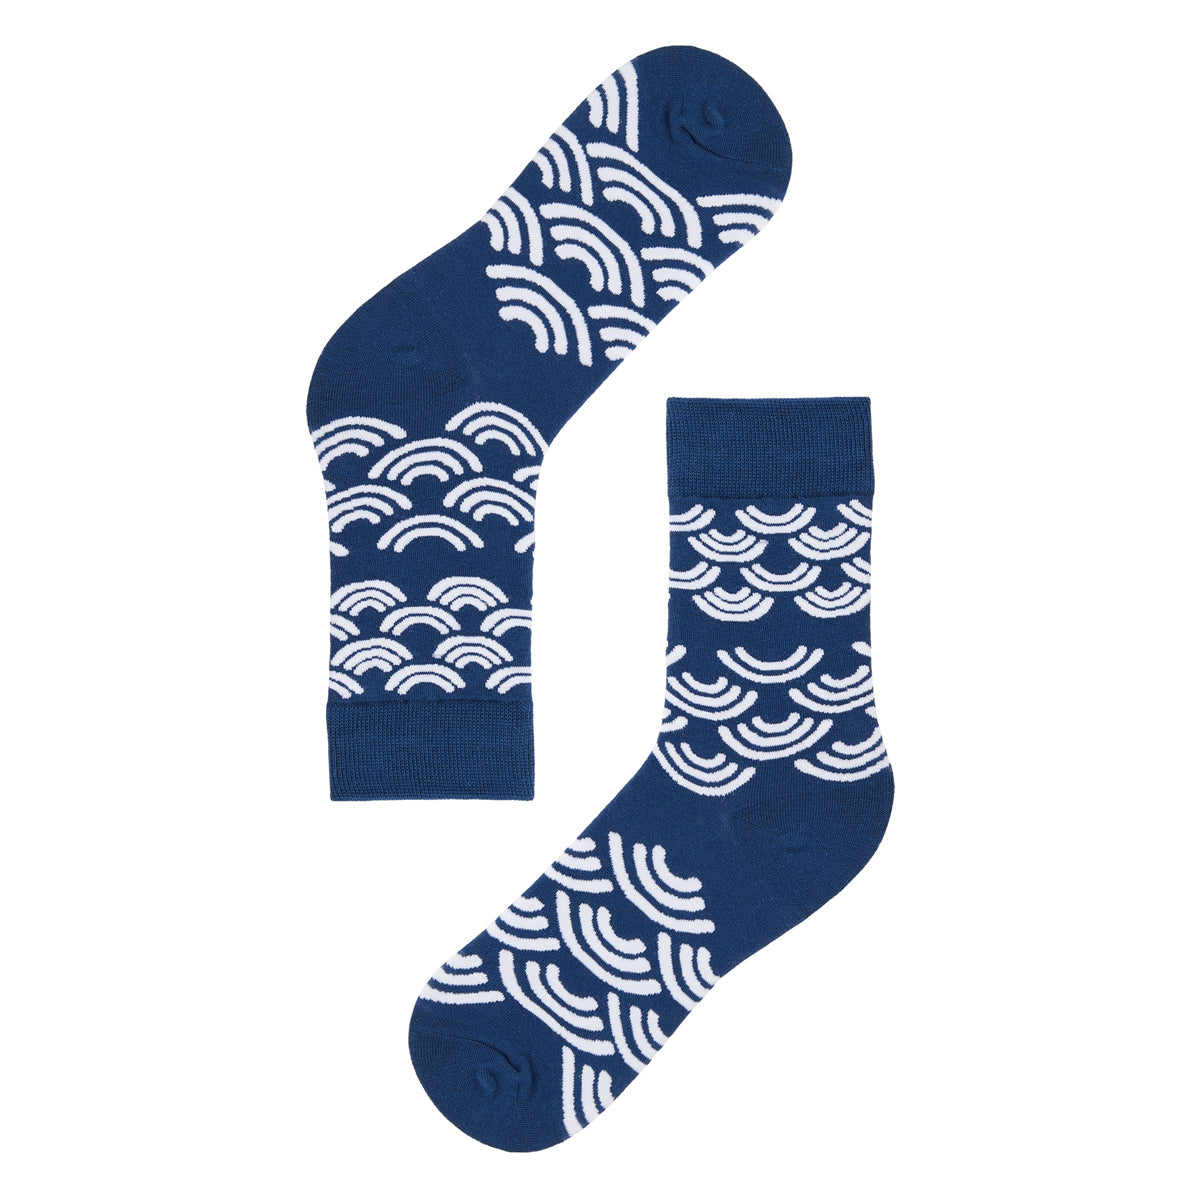 Blue Coral Printed Quarter Length Socks - IDENTITY Apparel Shop